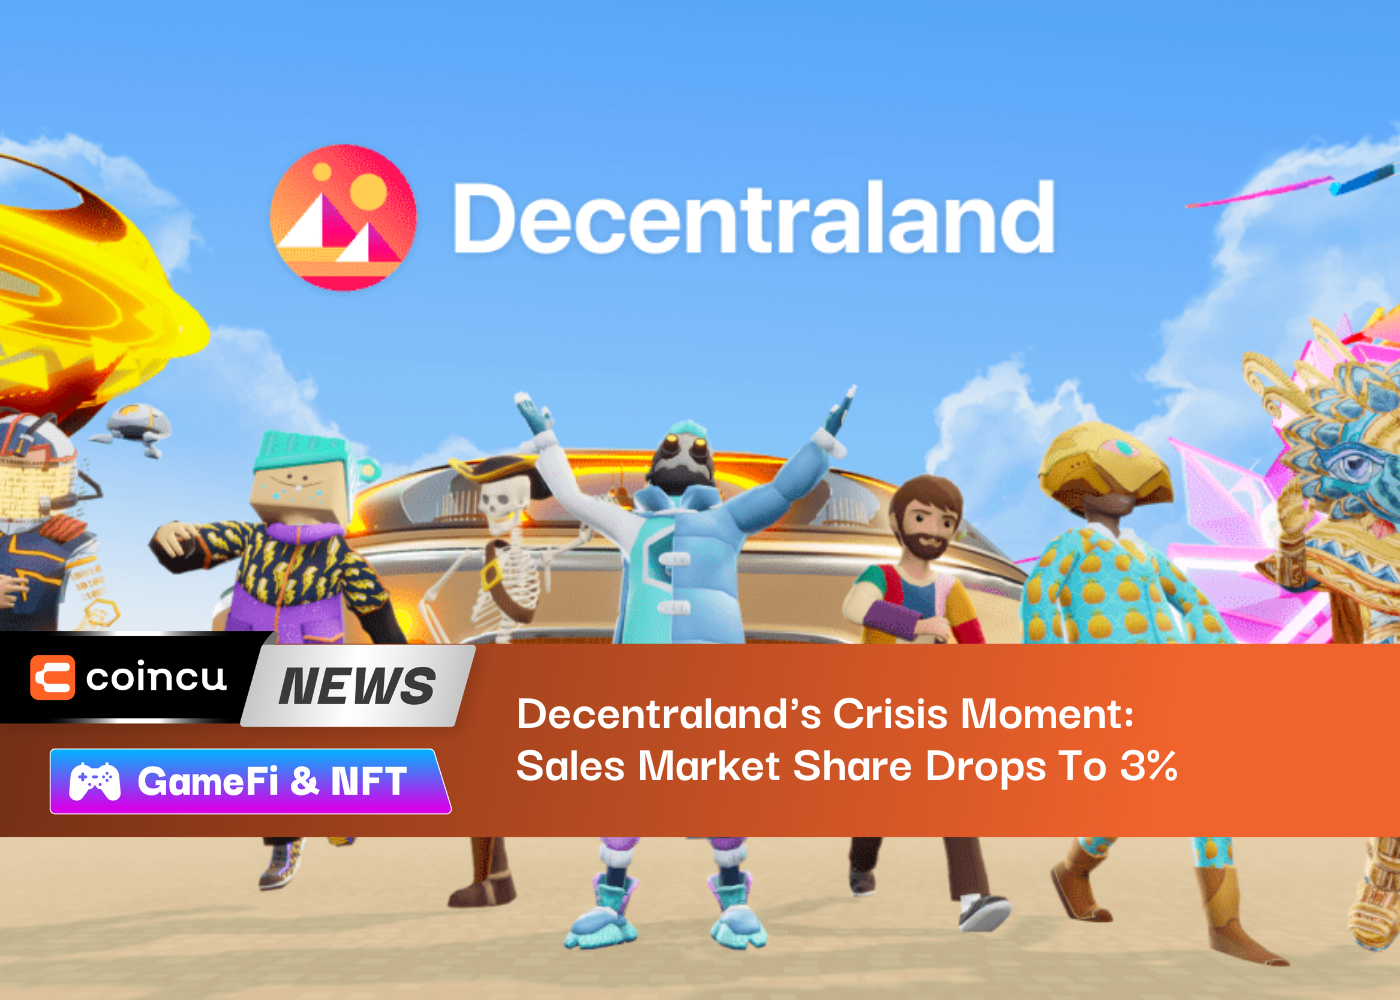 Decentraland's Crisis Moment: Sales Market Share Drops To 3%